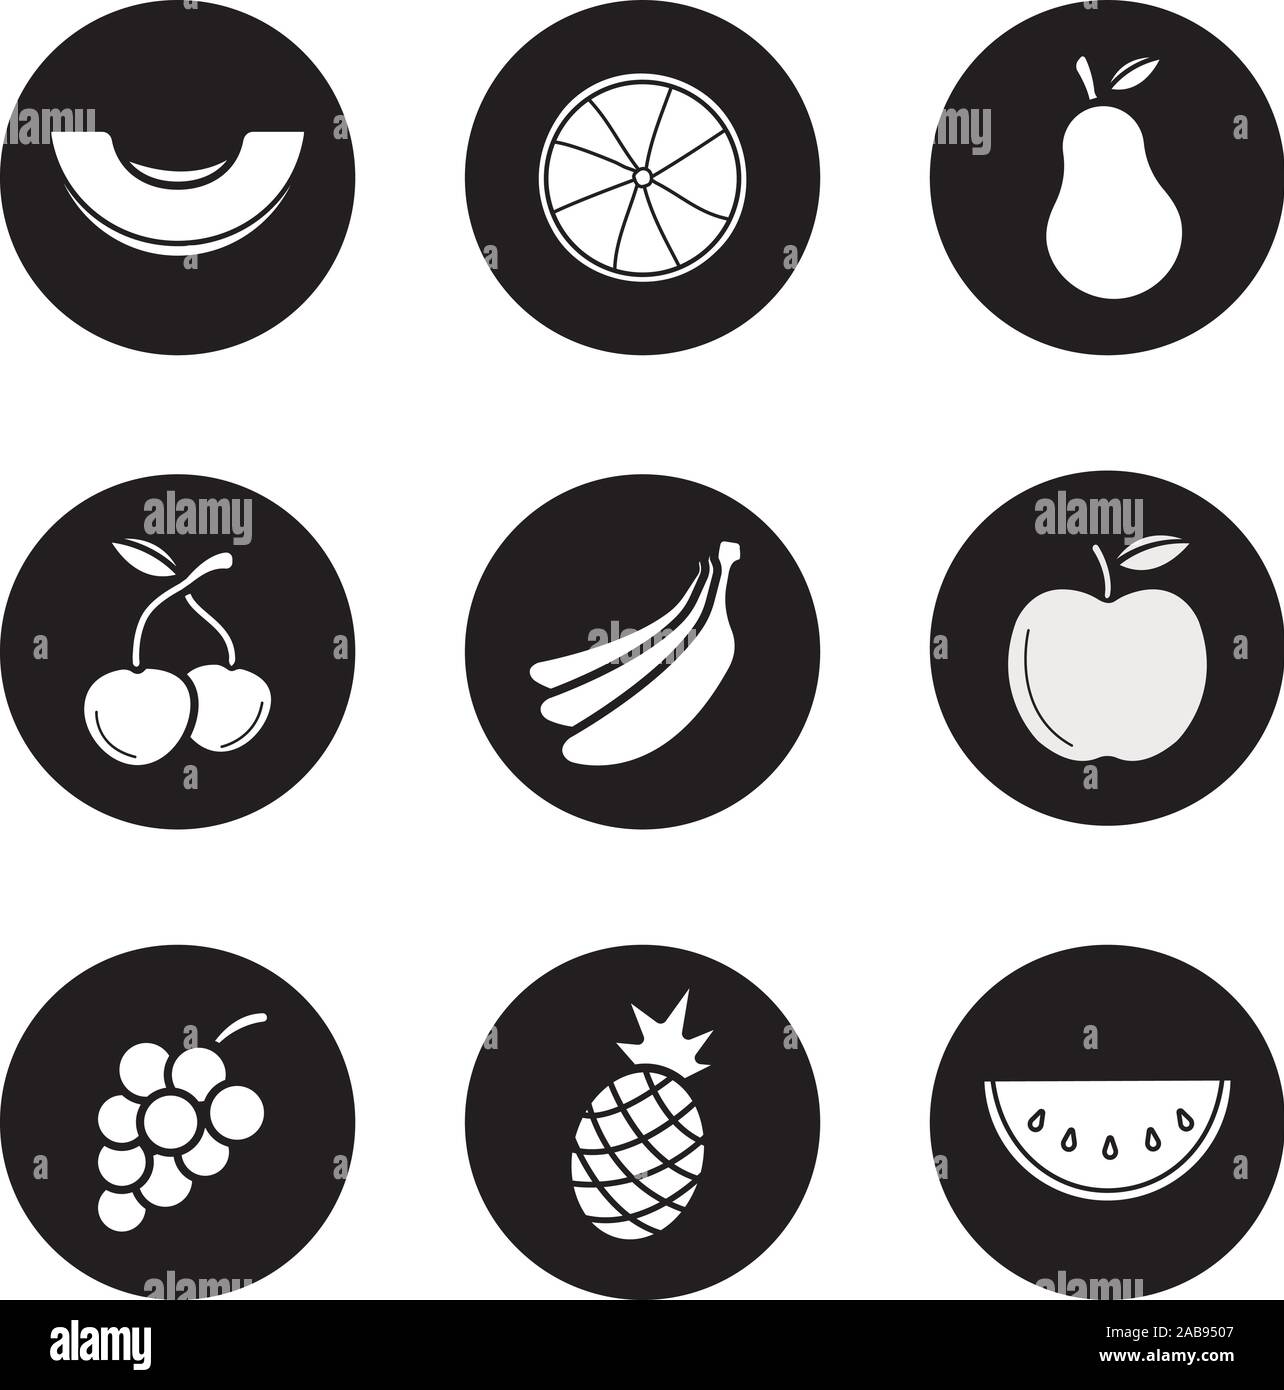 Fruit icons set. Melon slice, orange half, pear, cherries, bananas bundle, apple, grapes bunch, pineapple, watermelon. Vector white illustrations in b Stock Vector